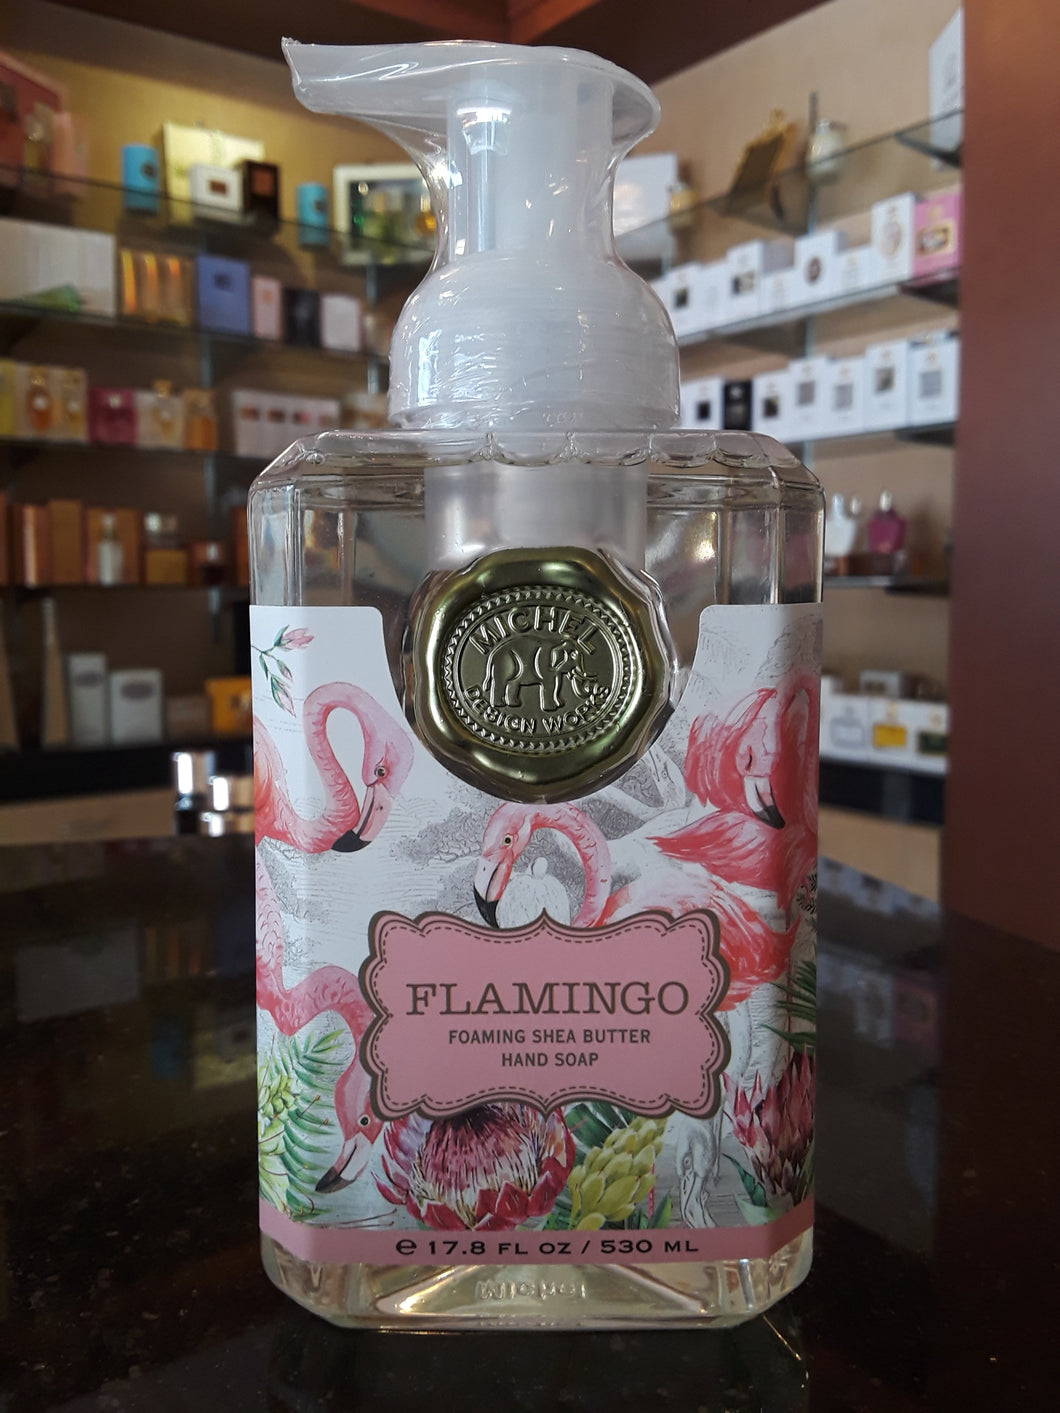 Flamingo hand soap